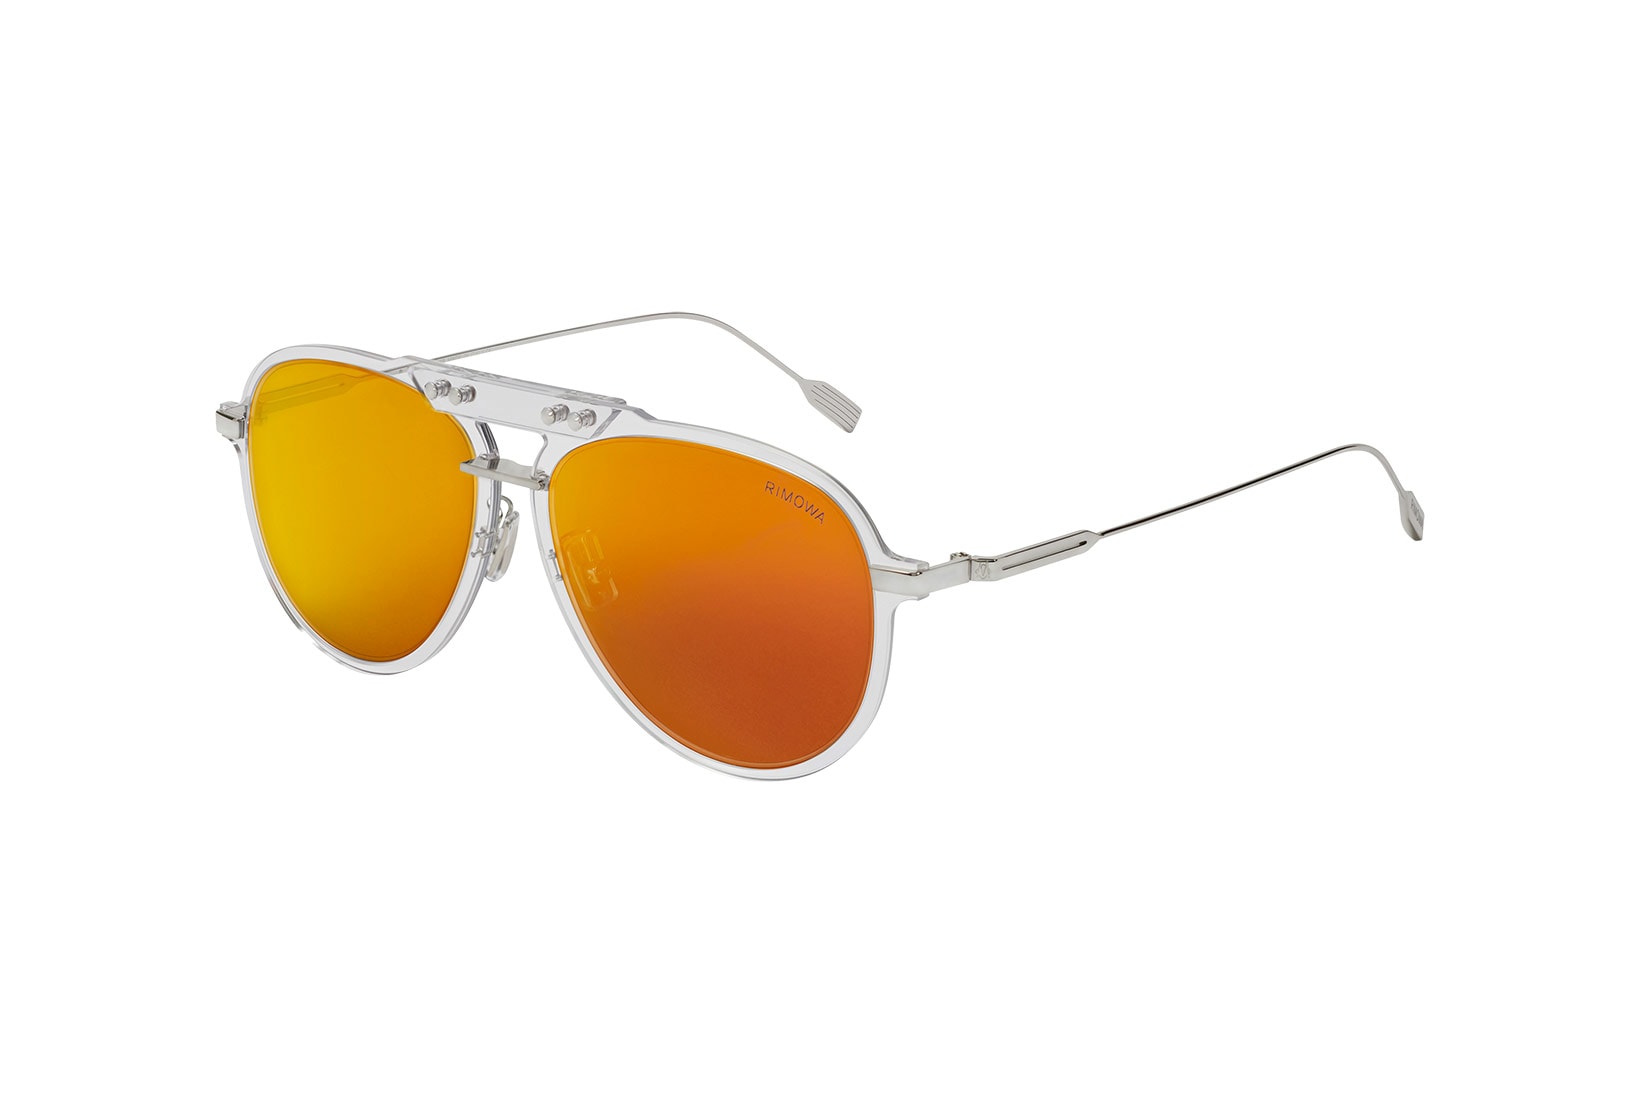 rimowa bridge sunglasses shades accessory side view mars orange colorway